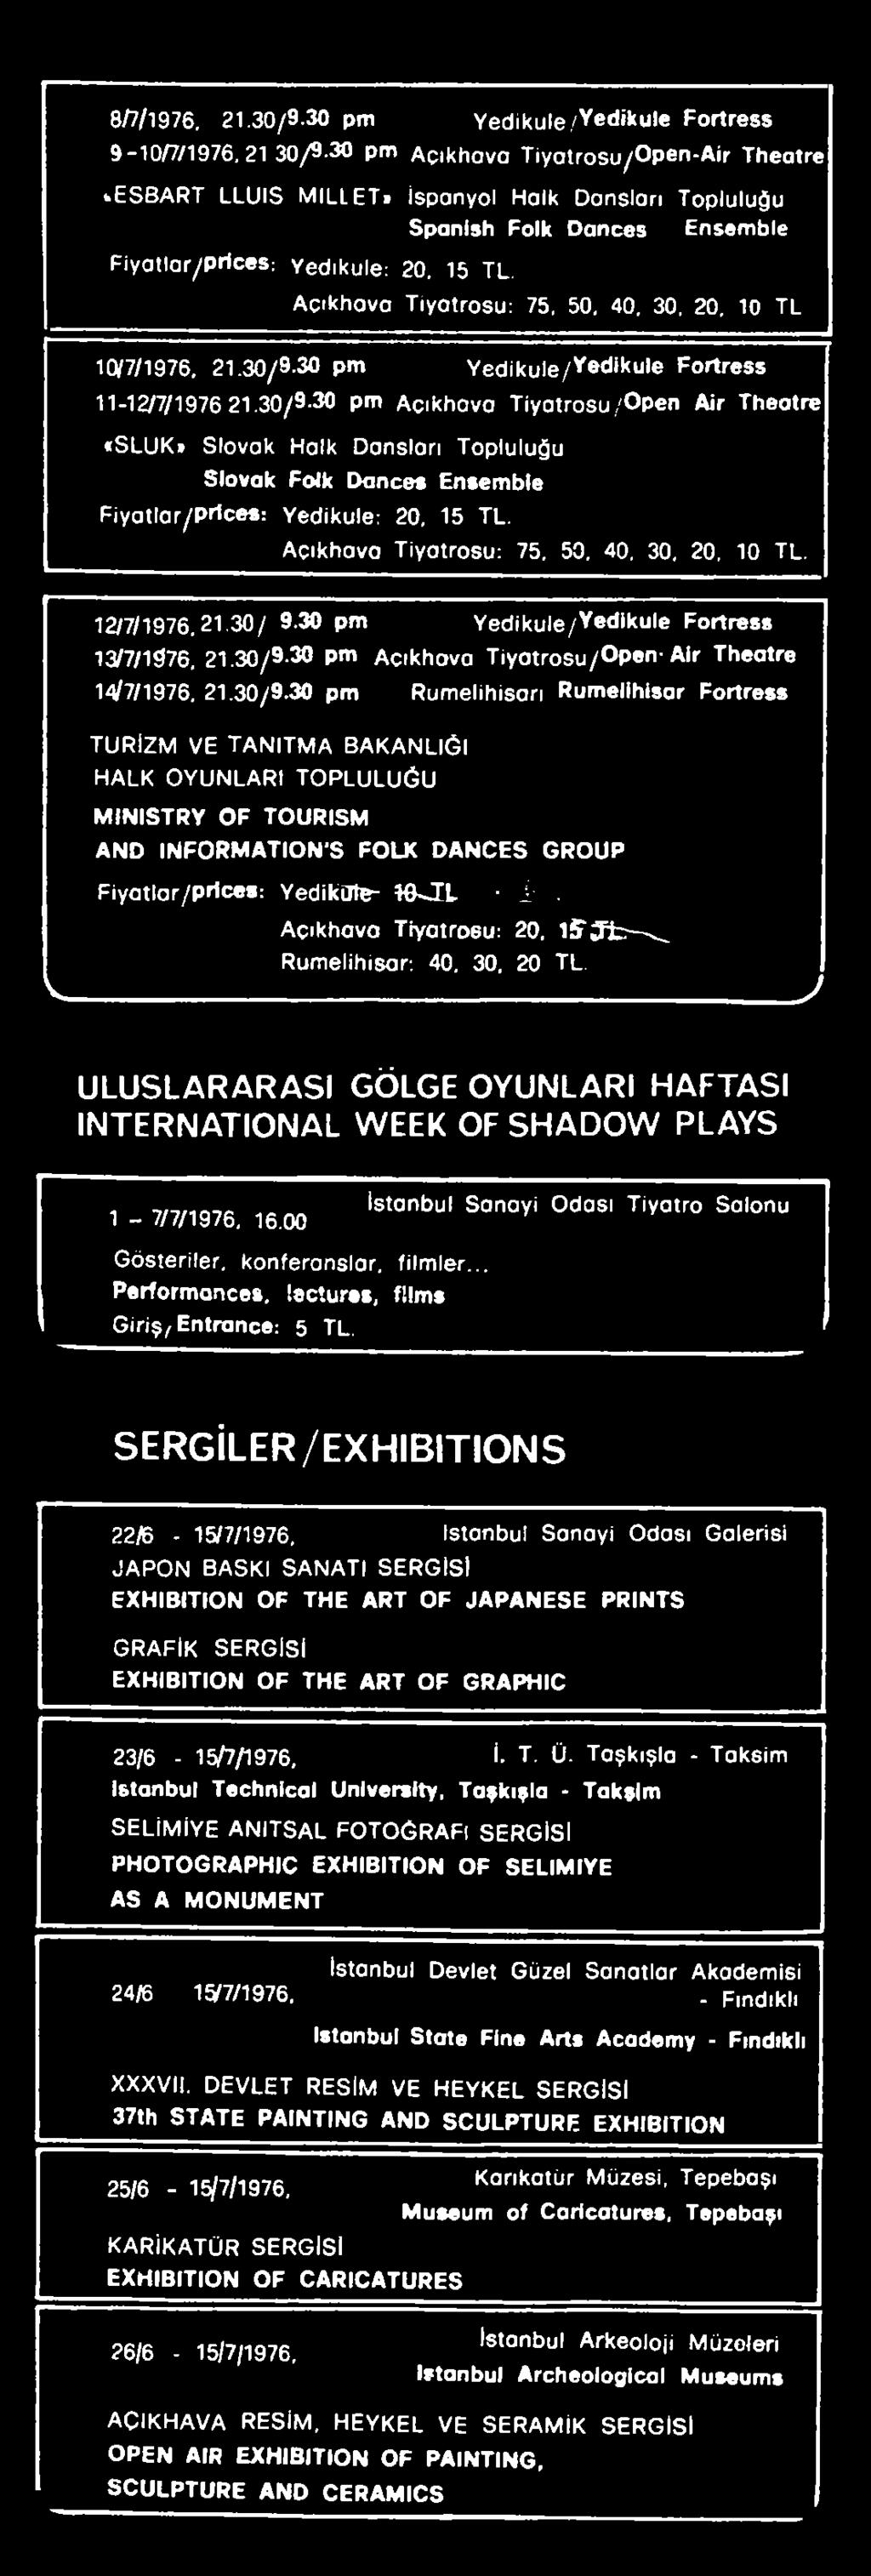 Acıkhava Tiyatrosu: 75, 50, 40, 30, 20, 10 TL. 12/7/1976,21.30 / 9.30 pm Yedikule/Yedikule Fortress 13/7/1976, 21.30/9-30 pm Acıkhava Tiyatrosu/Open- Air Theatre 14/7/1976, 21.